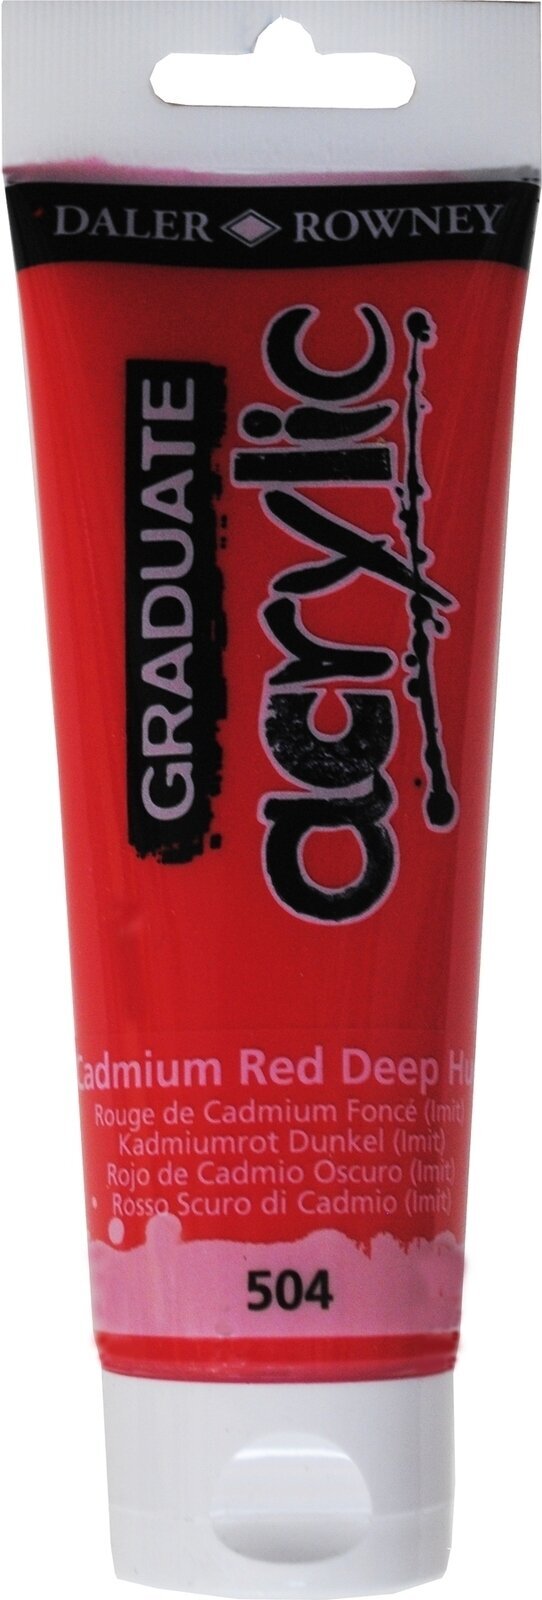 Farba akrylowa Daler Rowney Graduate Farba akrylowa Cadmium Red Deep Hue 120 ml 1 szt